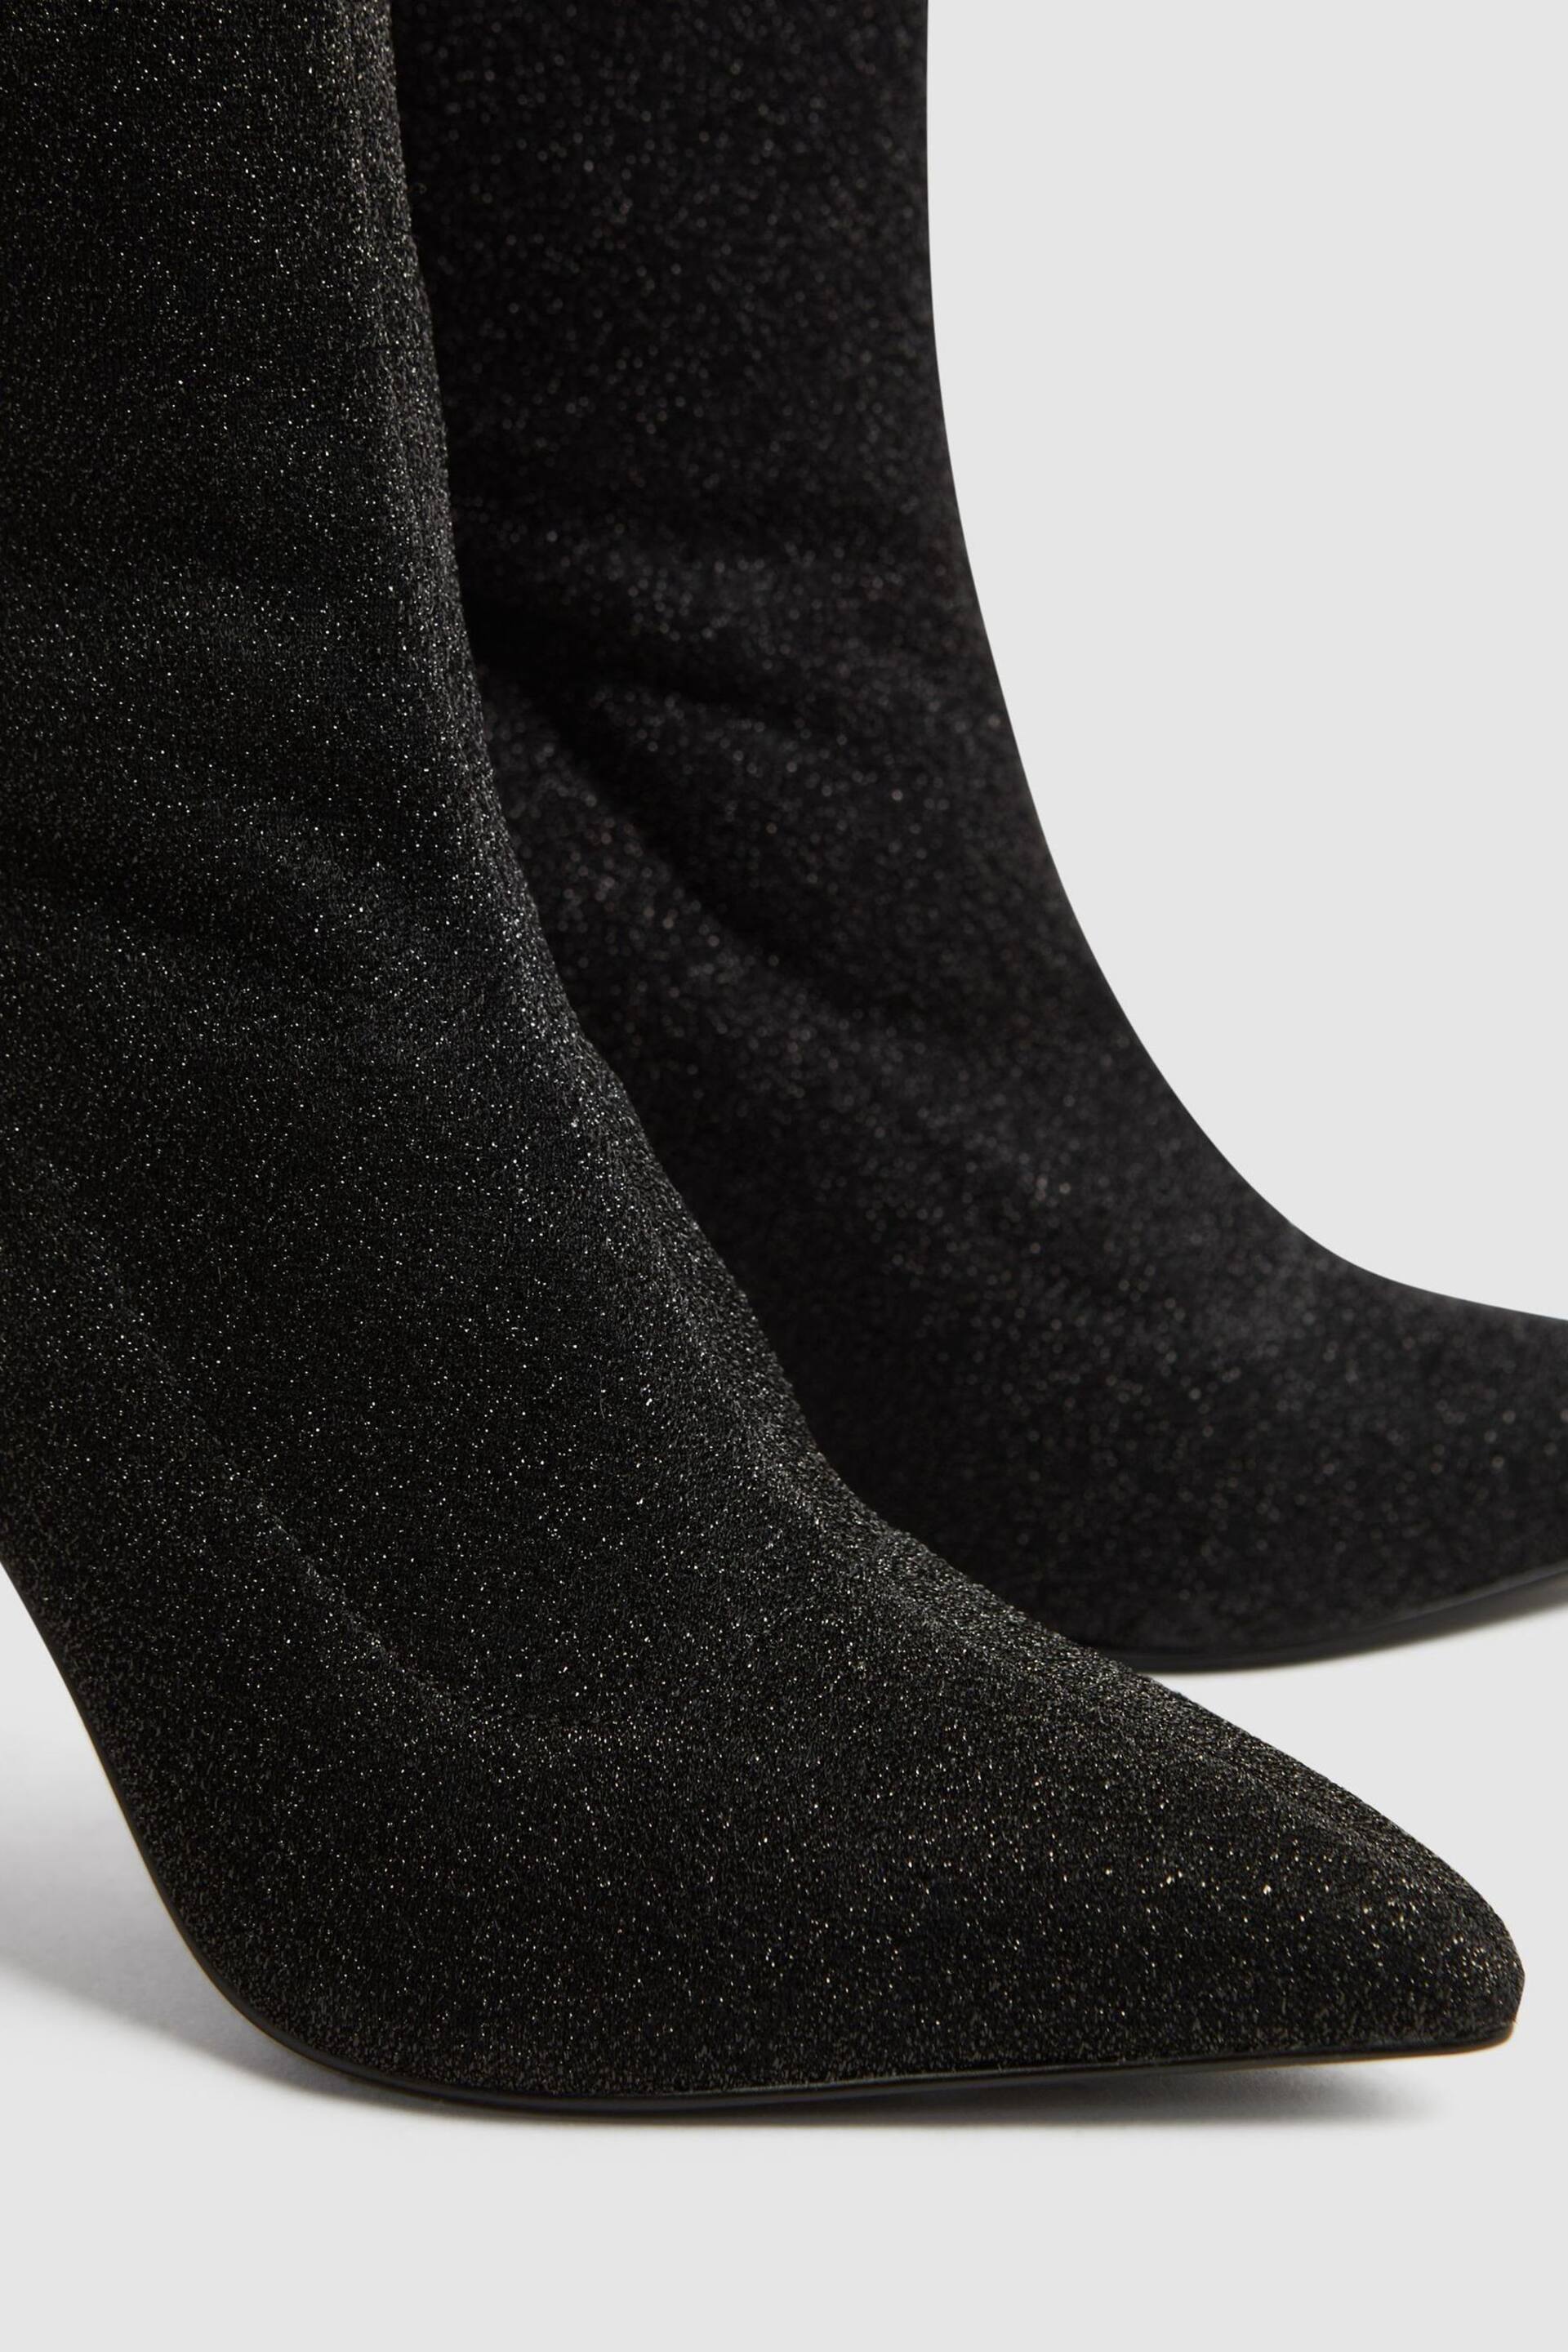 Reiss Black Jess Metallic Sock Boots - Image 5 of 5